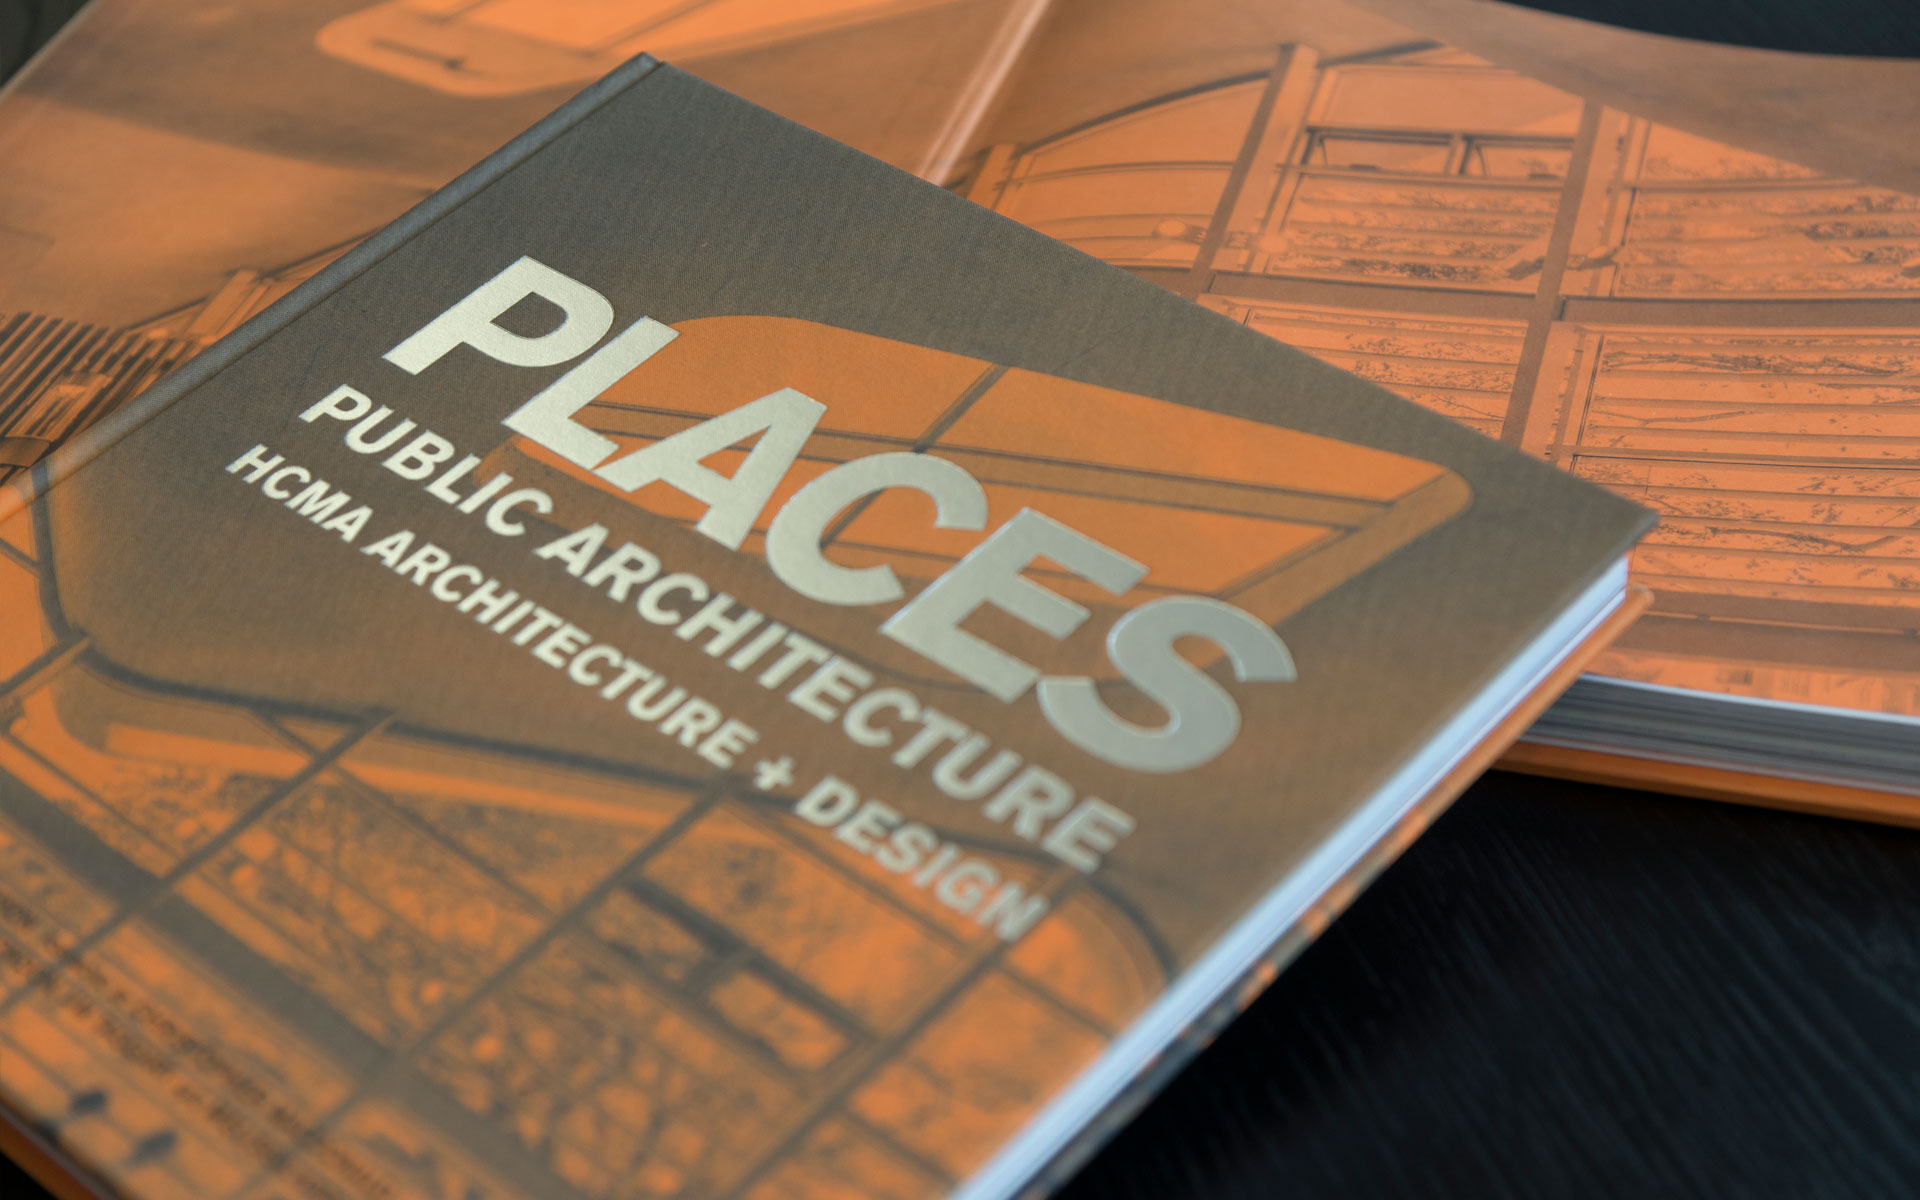 PLACES: Public Architecture by HCMA Architecture + Design, Vancouver, Canada